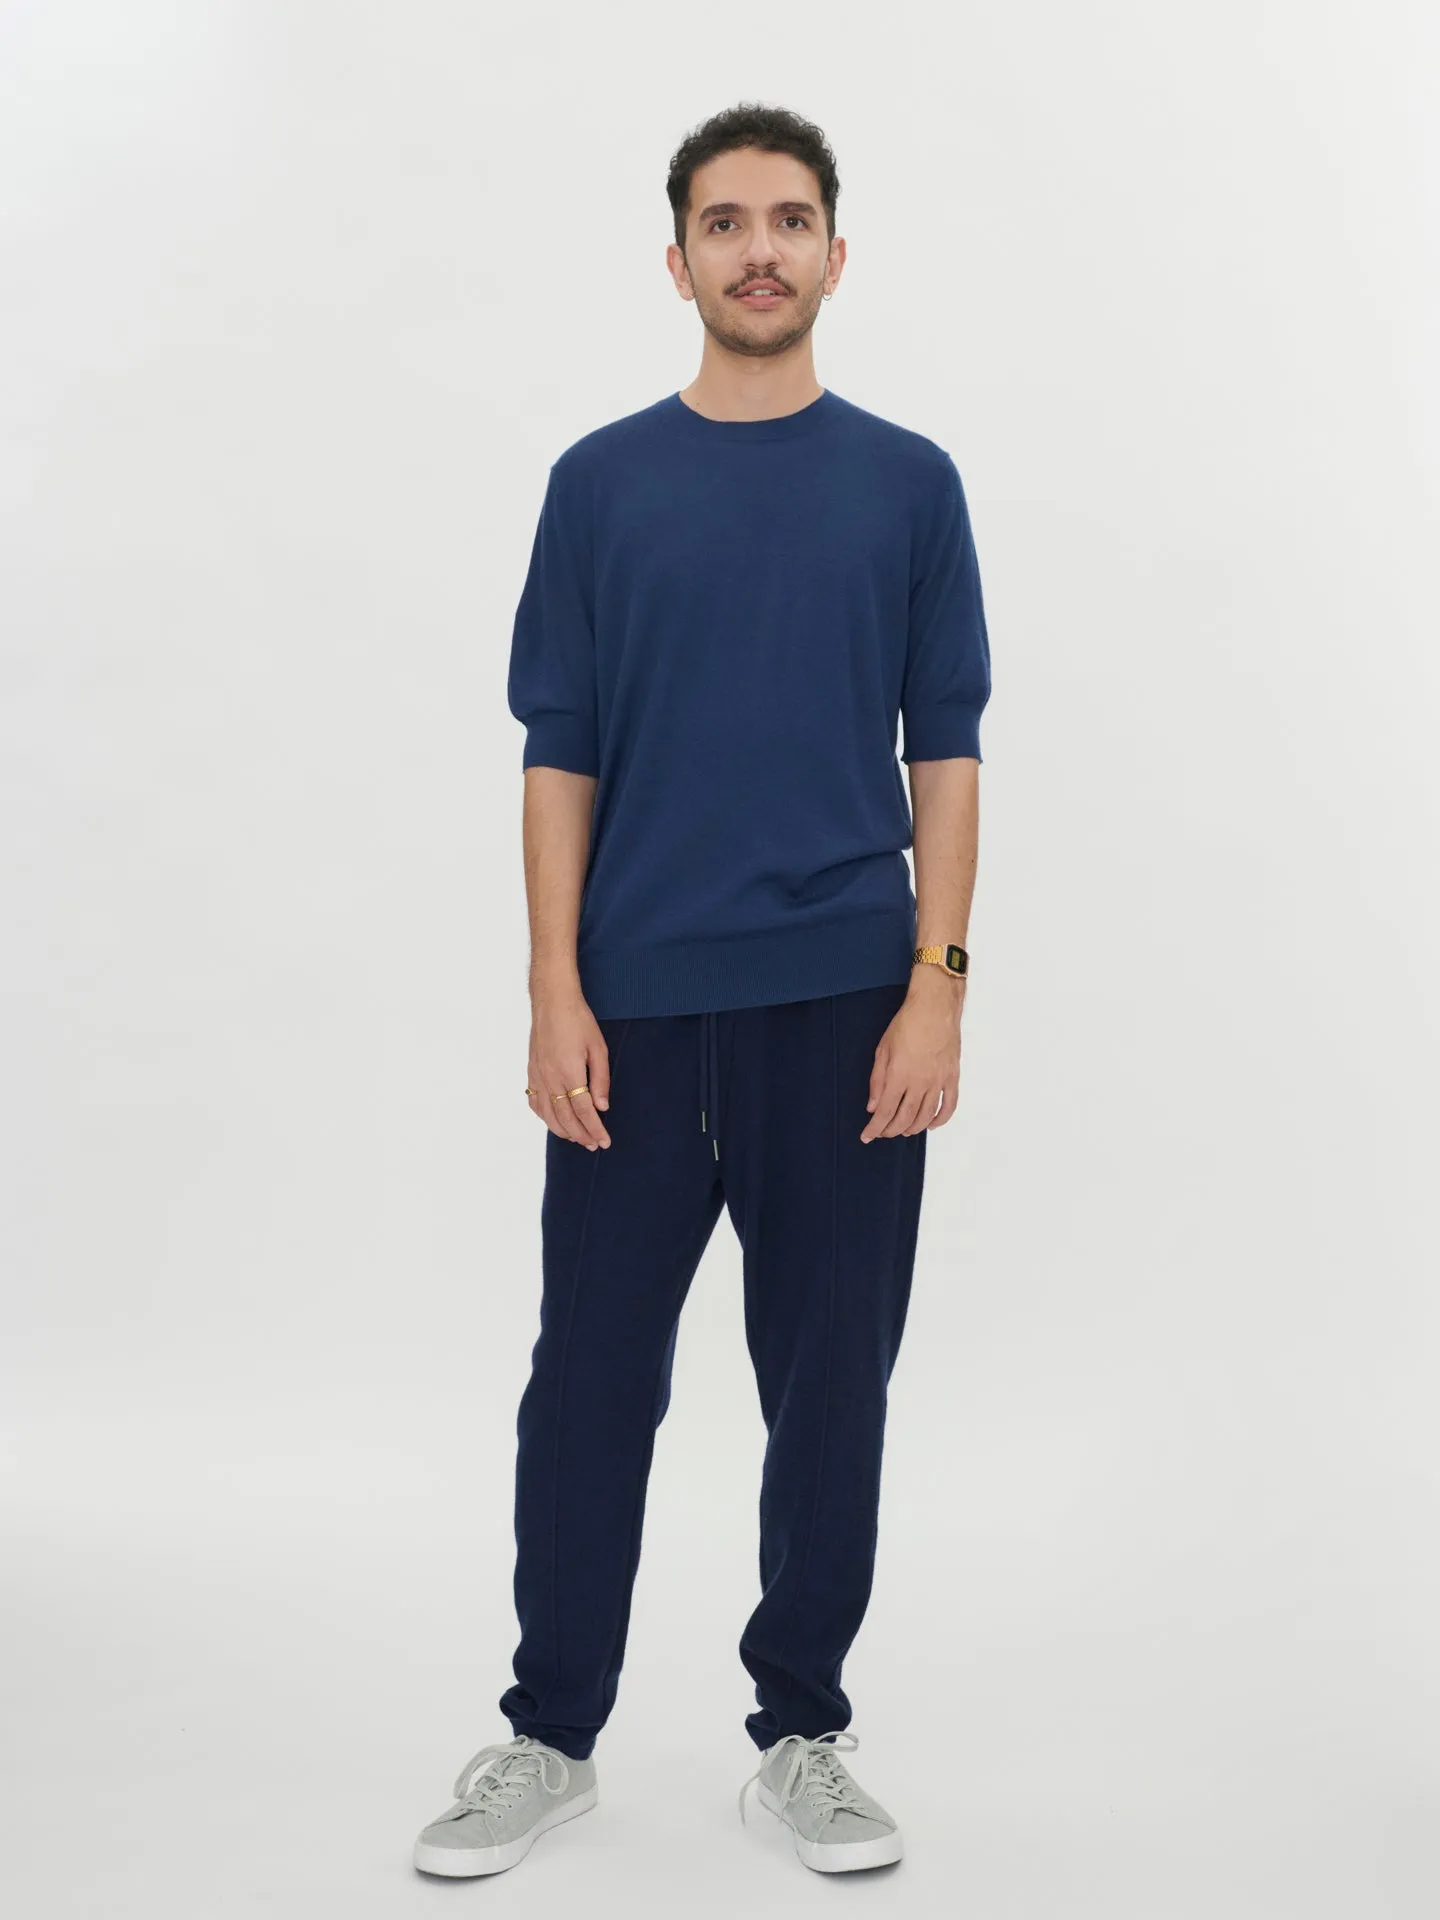 Men's Silk Cashmere T-Shirt Navy - Gobi Cashmere